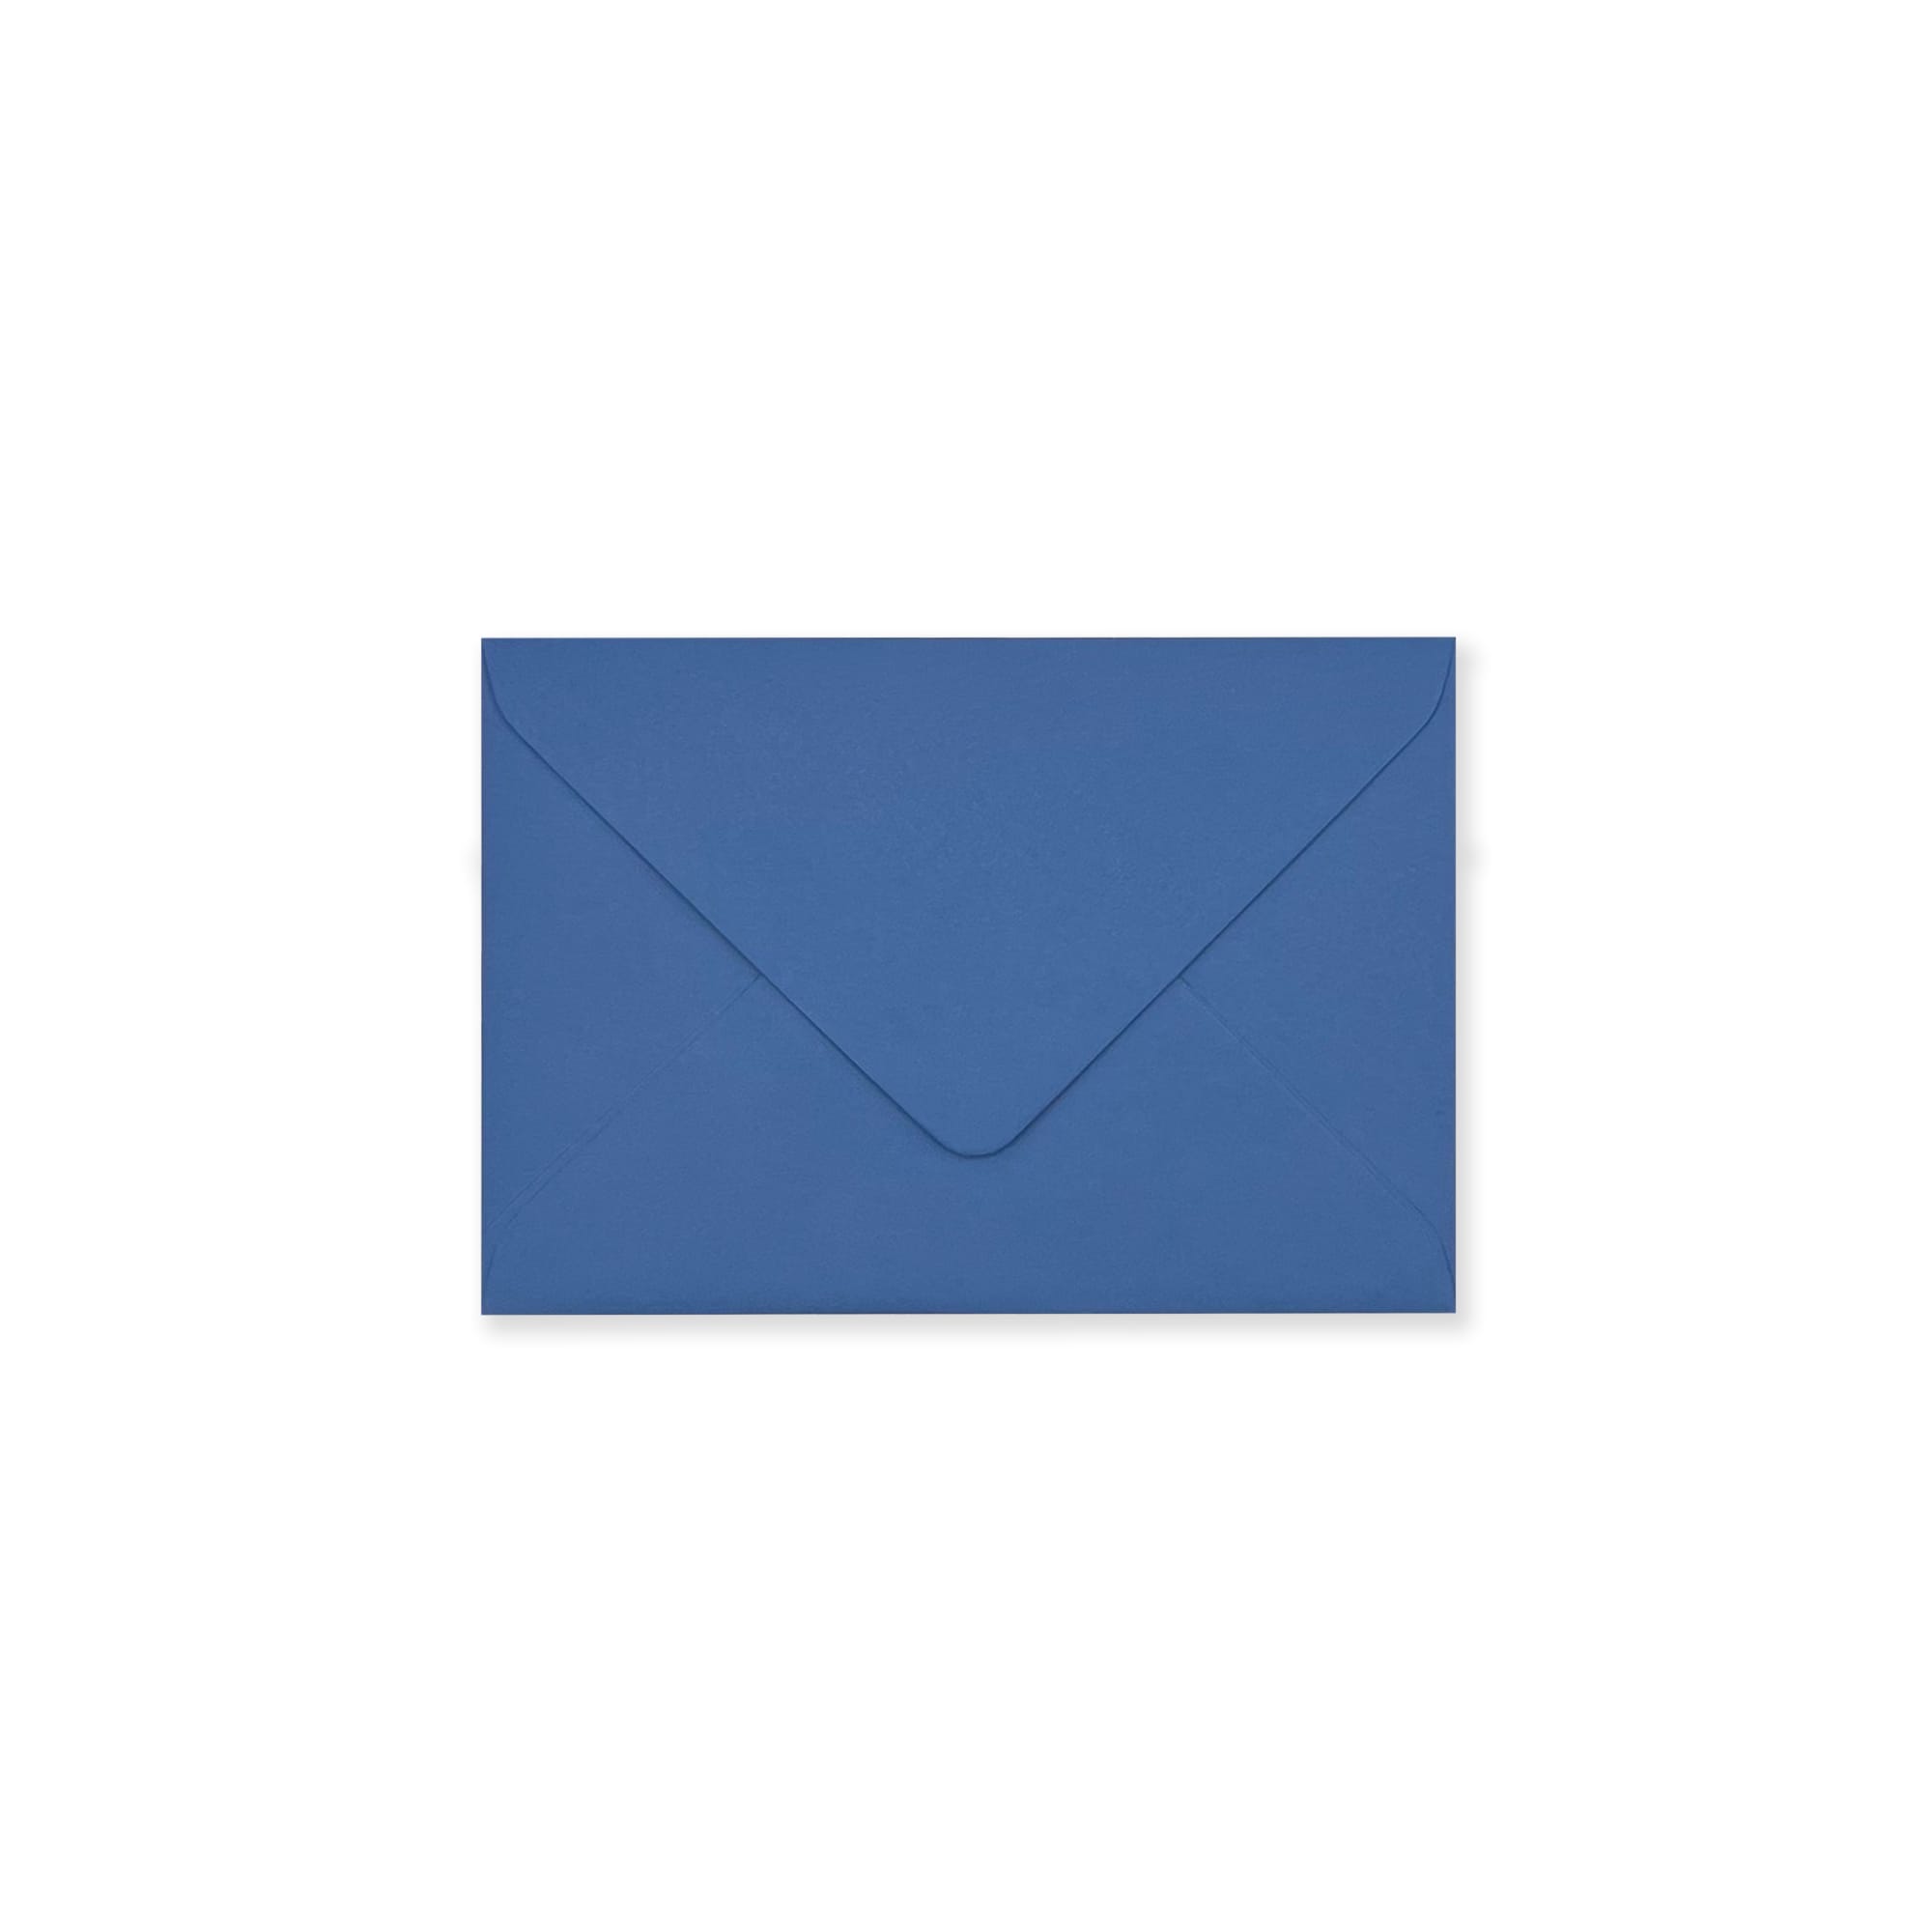 China Blue 125 x 175mm Envelopes 100gsm